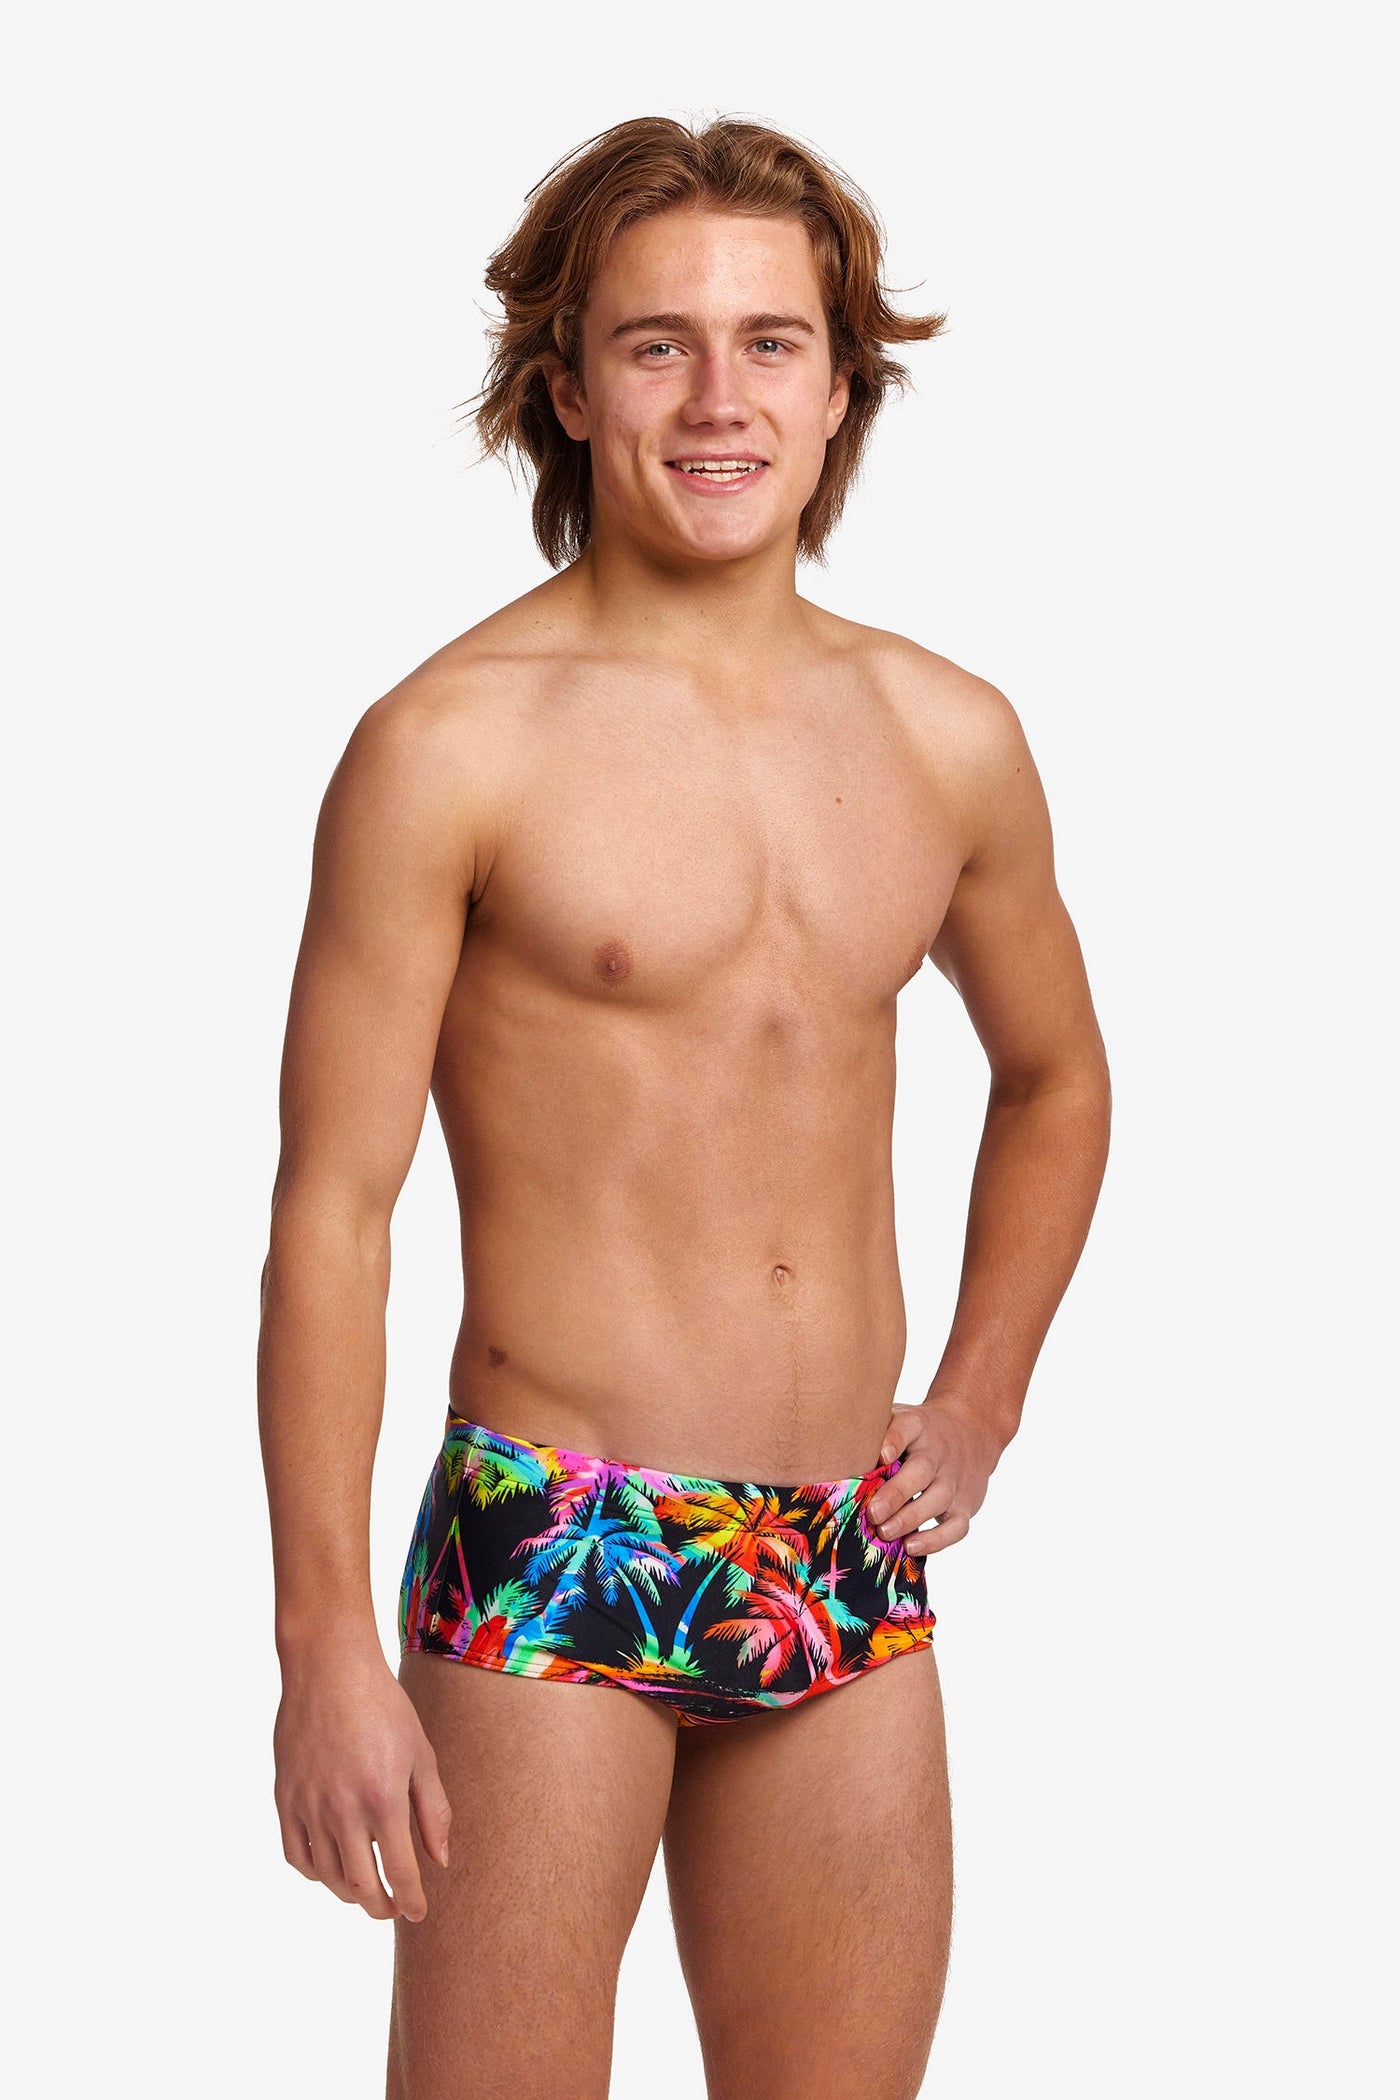 Sunset City Sidewinder Trunks Swimsuit FTS010B - Boys